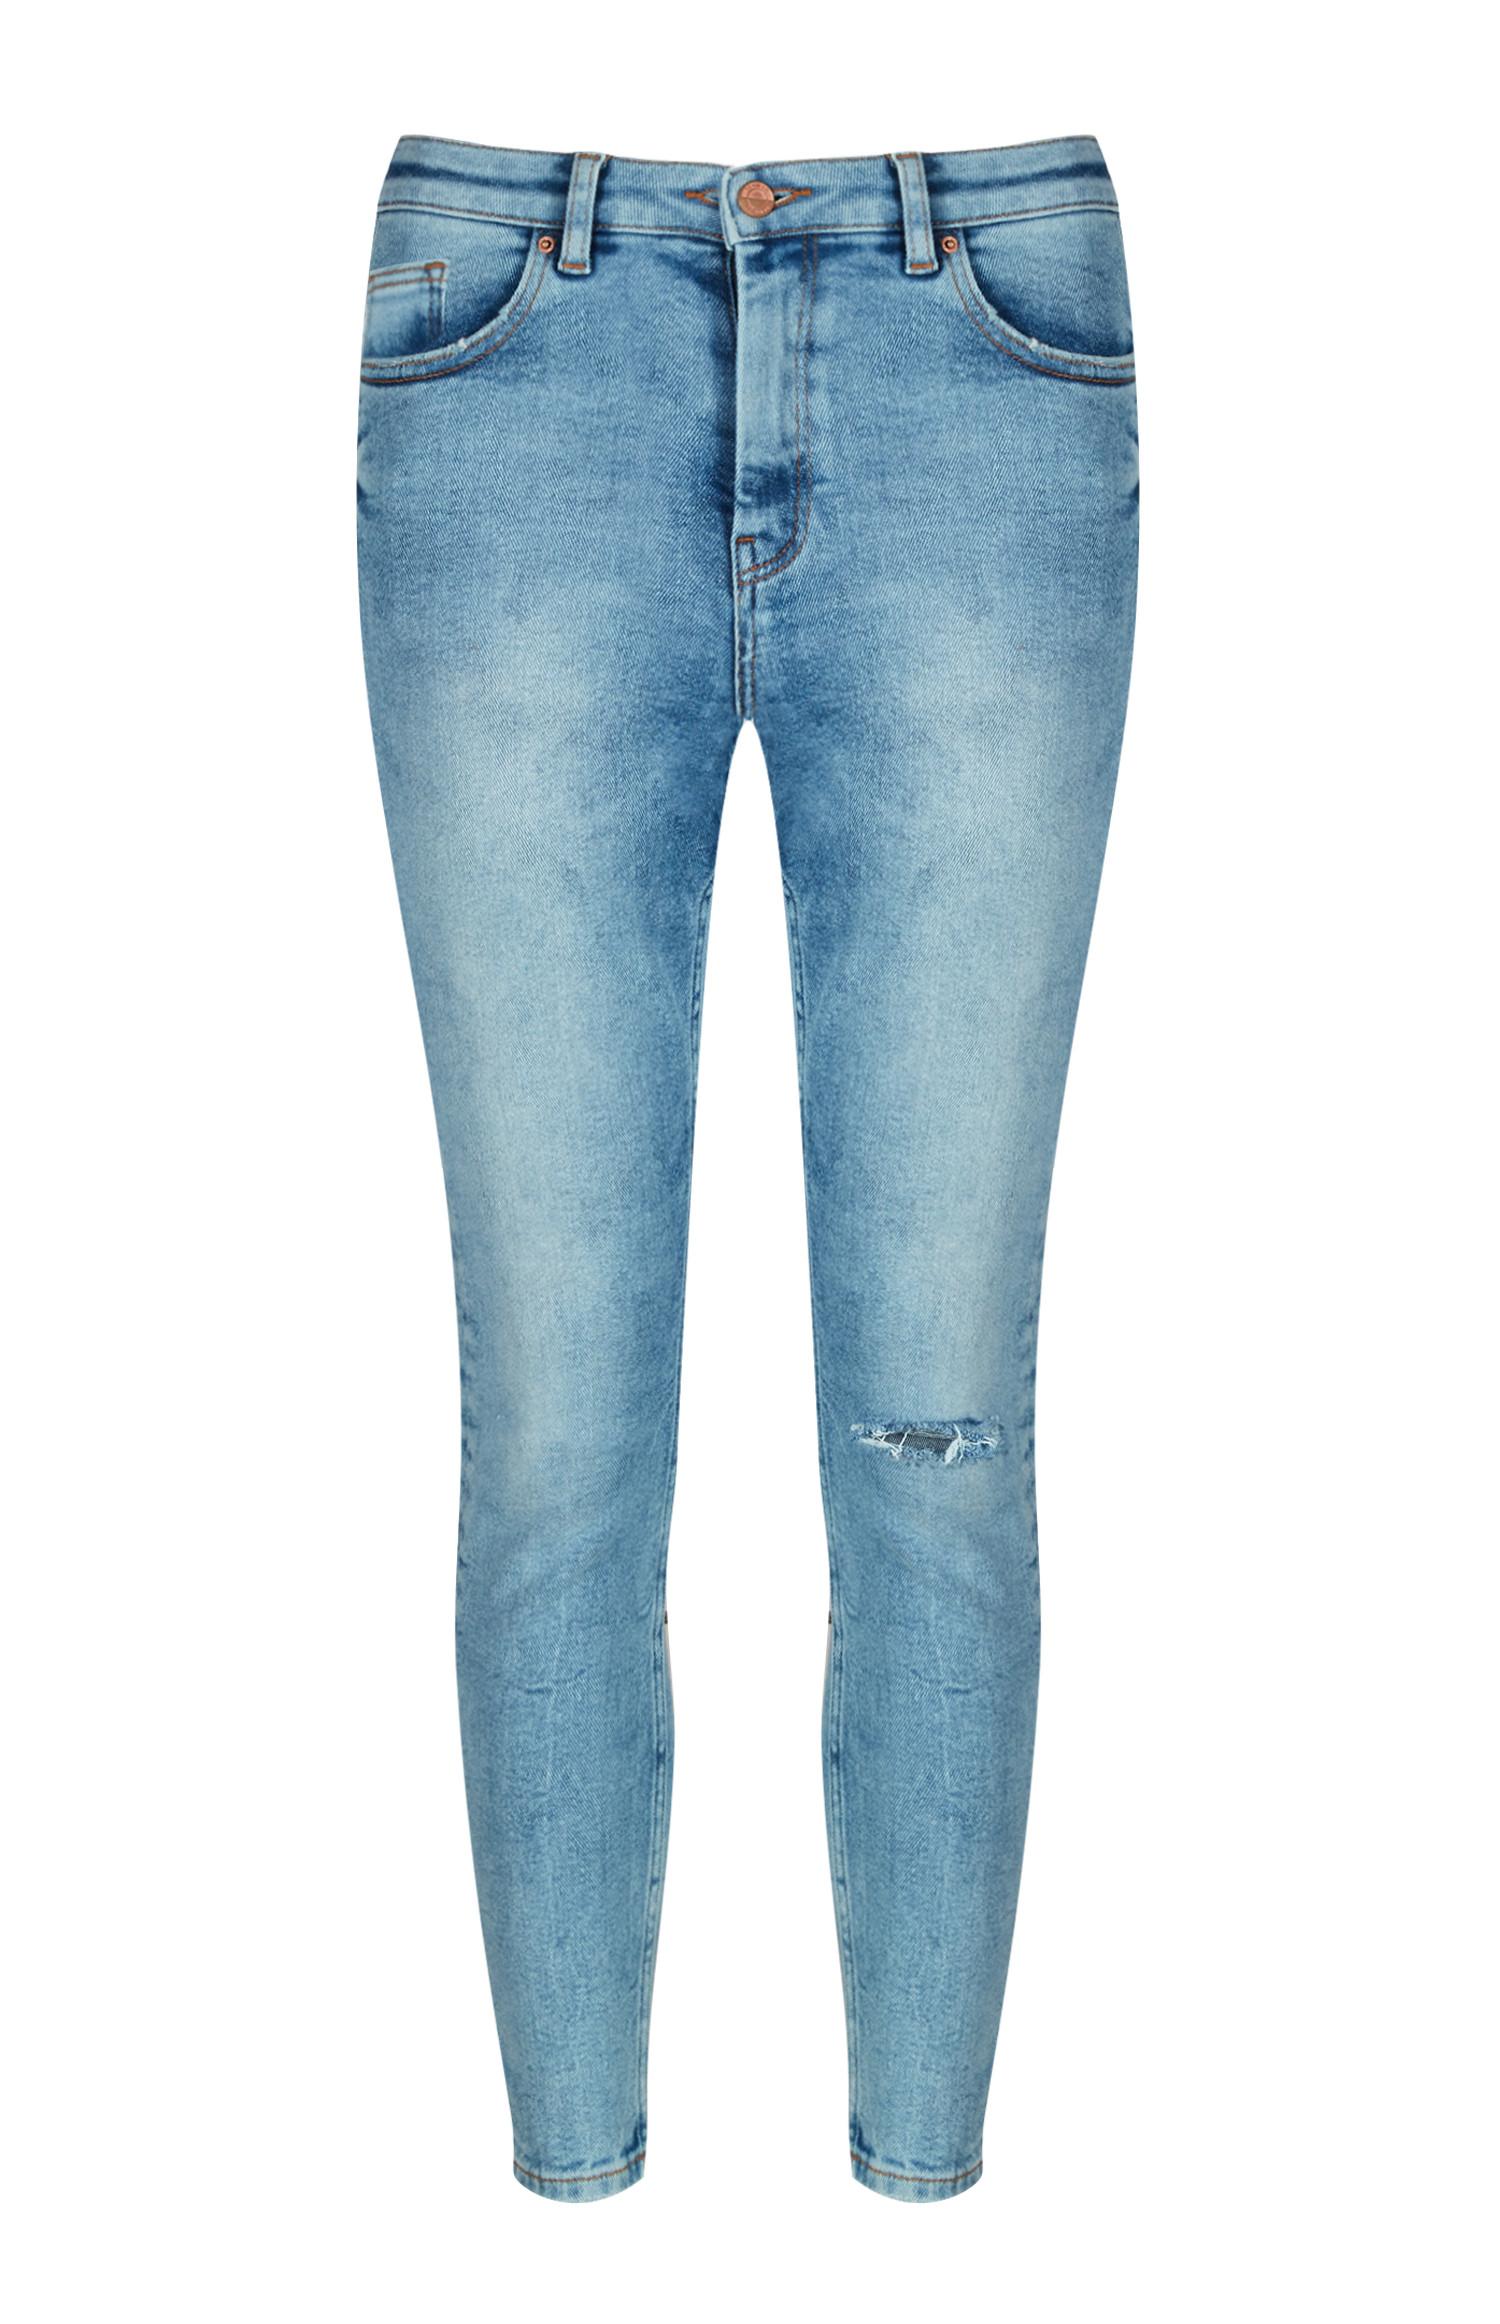 primark vintage skinny jeans